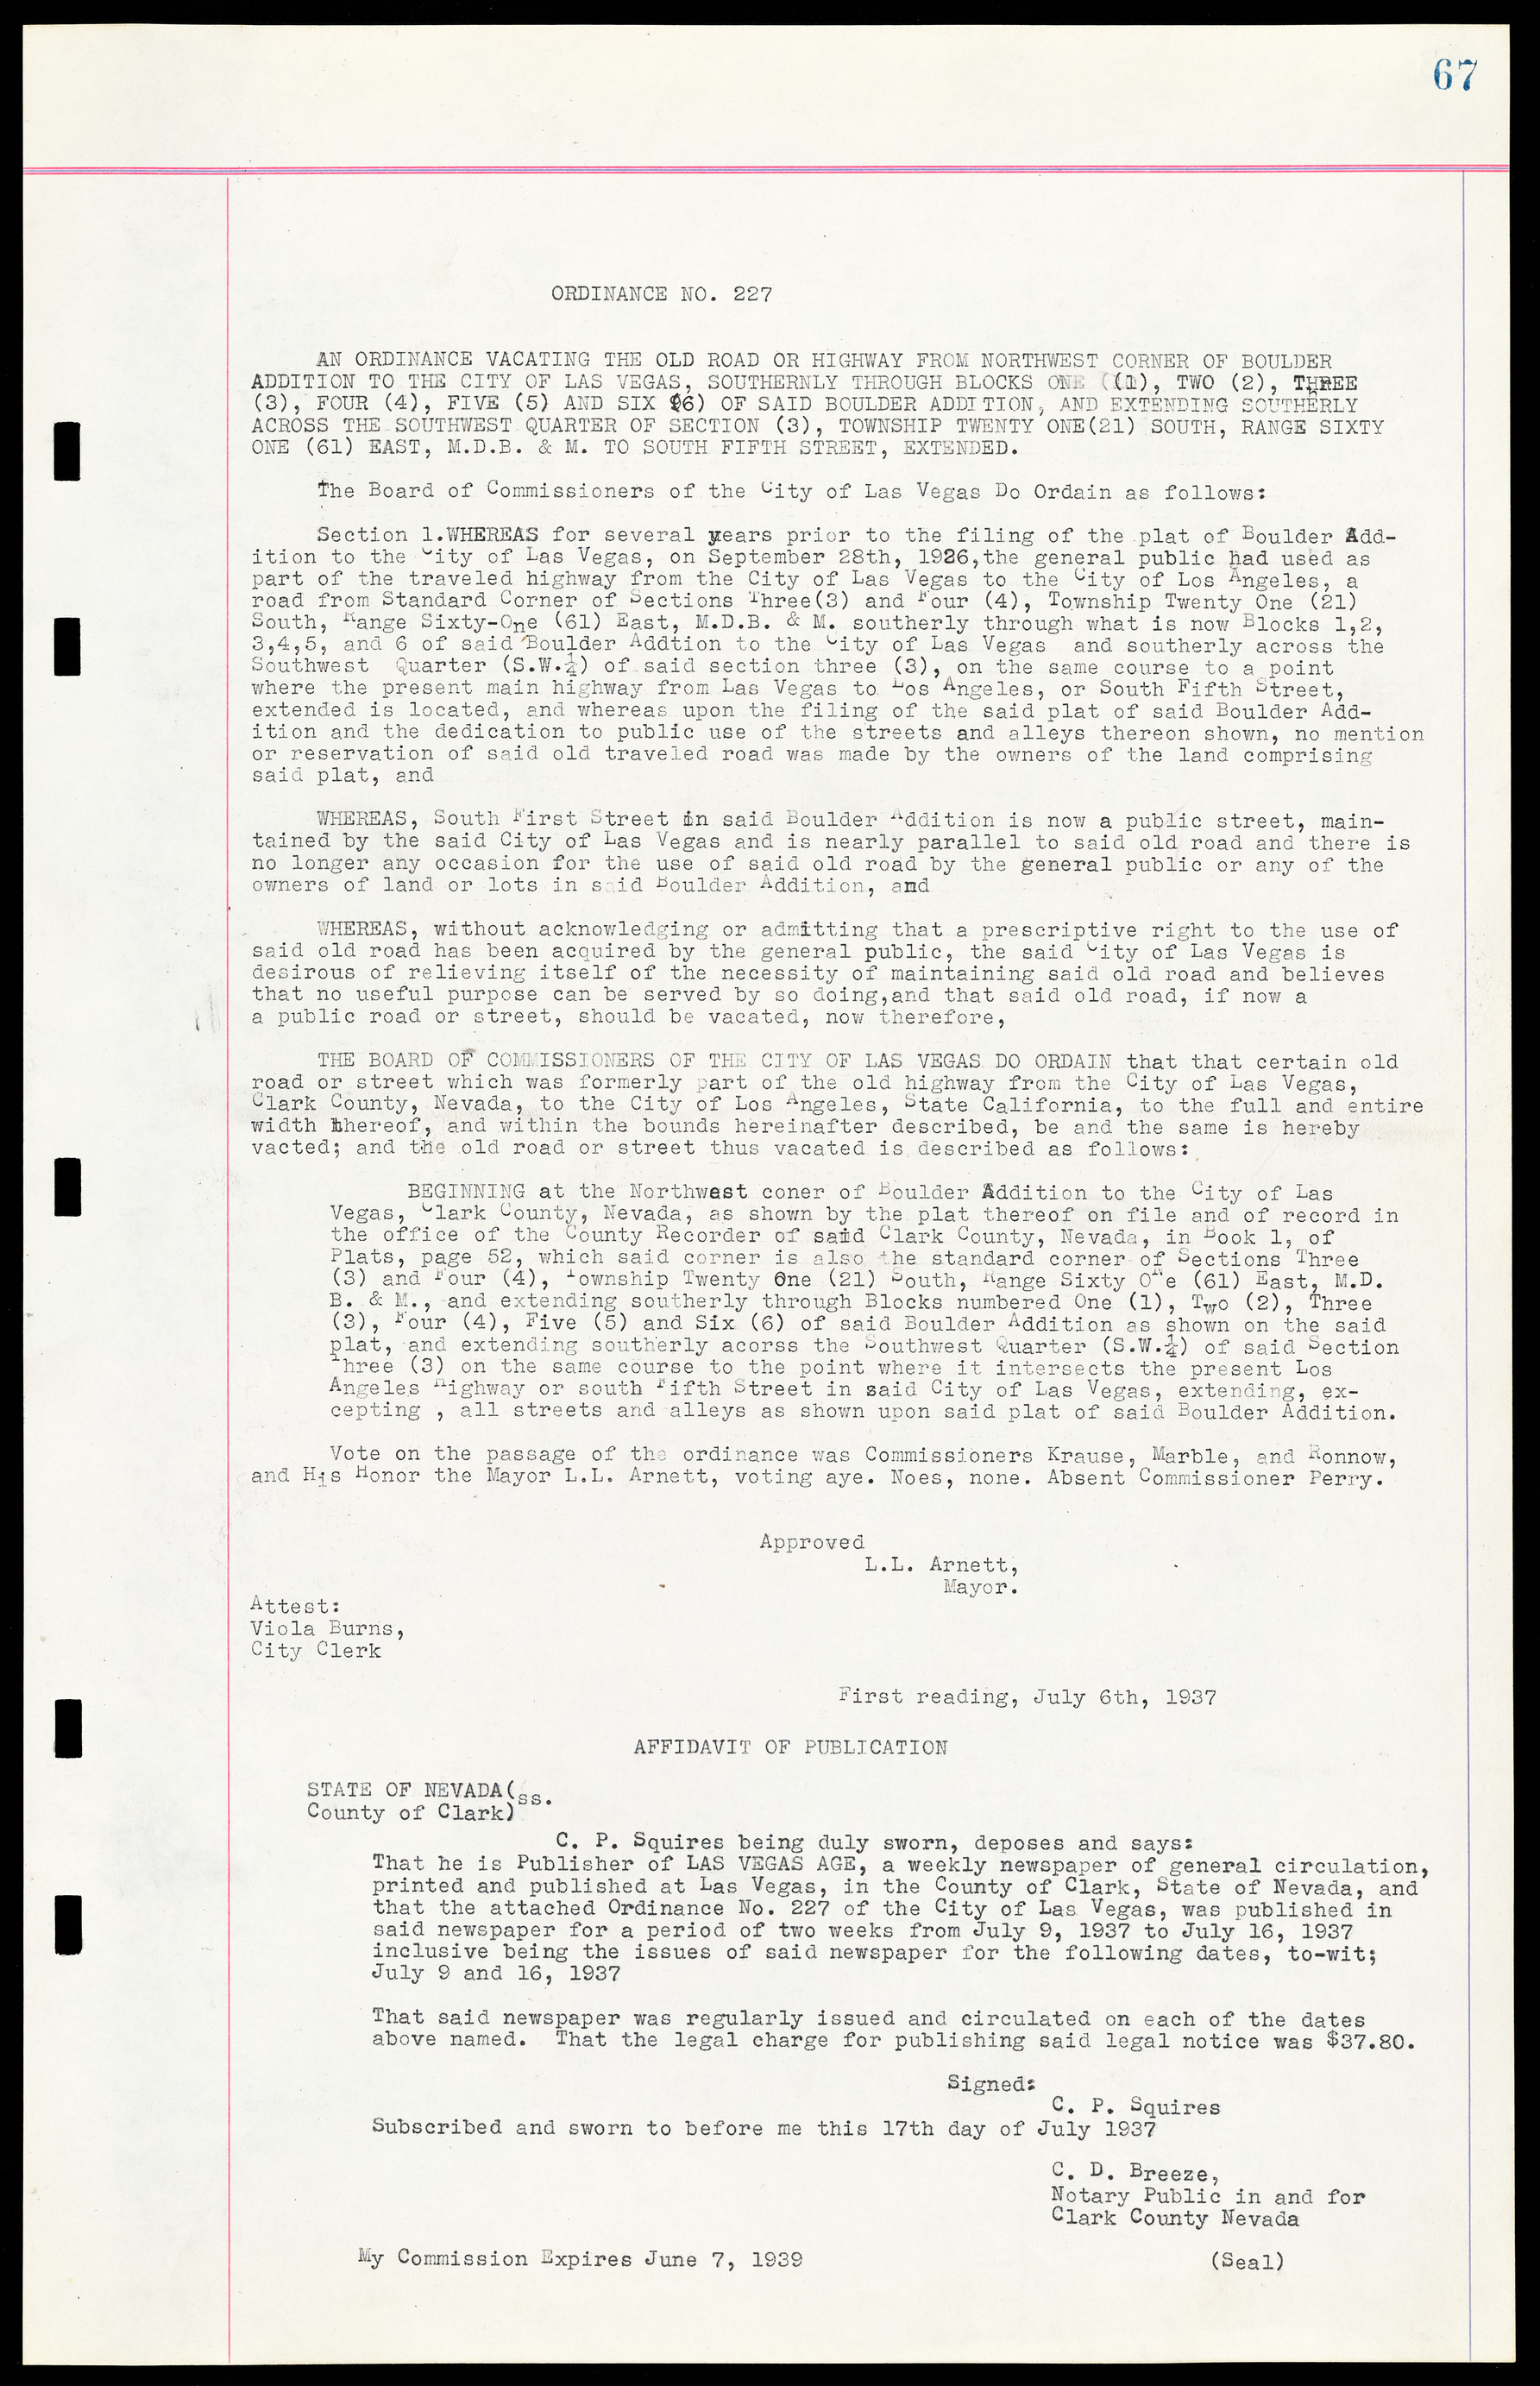 Las Vegas City Ordinances, March 31, 1933 to October 25, 1950, lvc000014-85